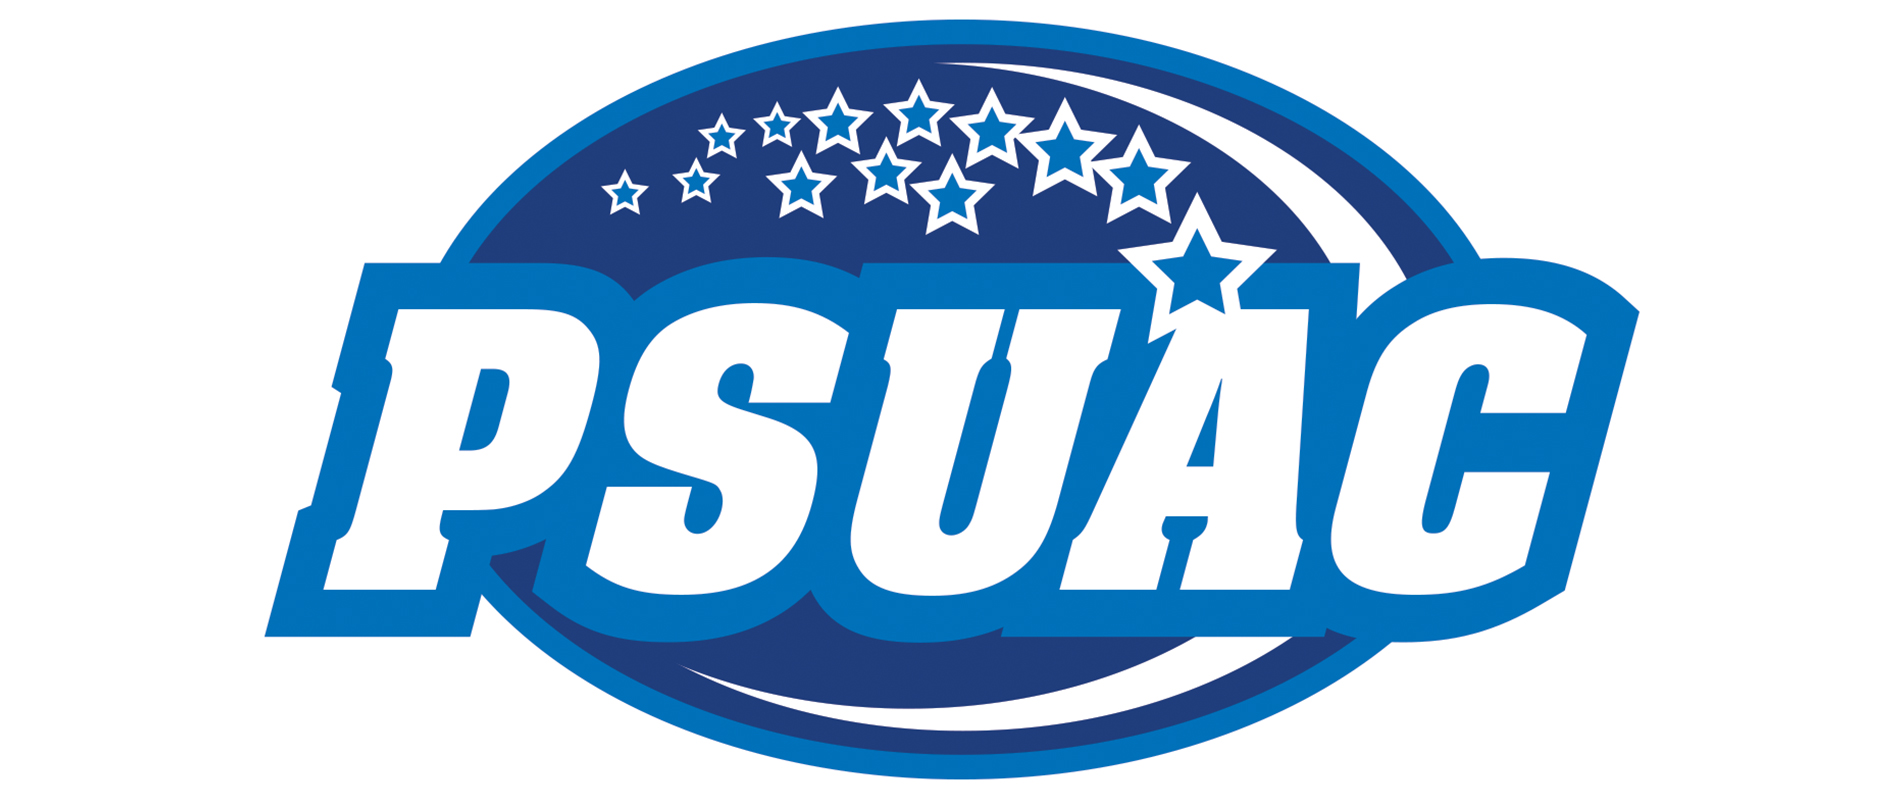 PSUAC logo.